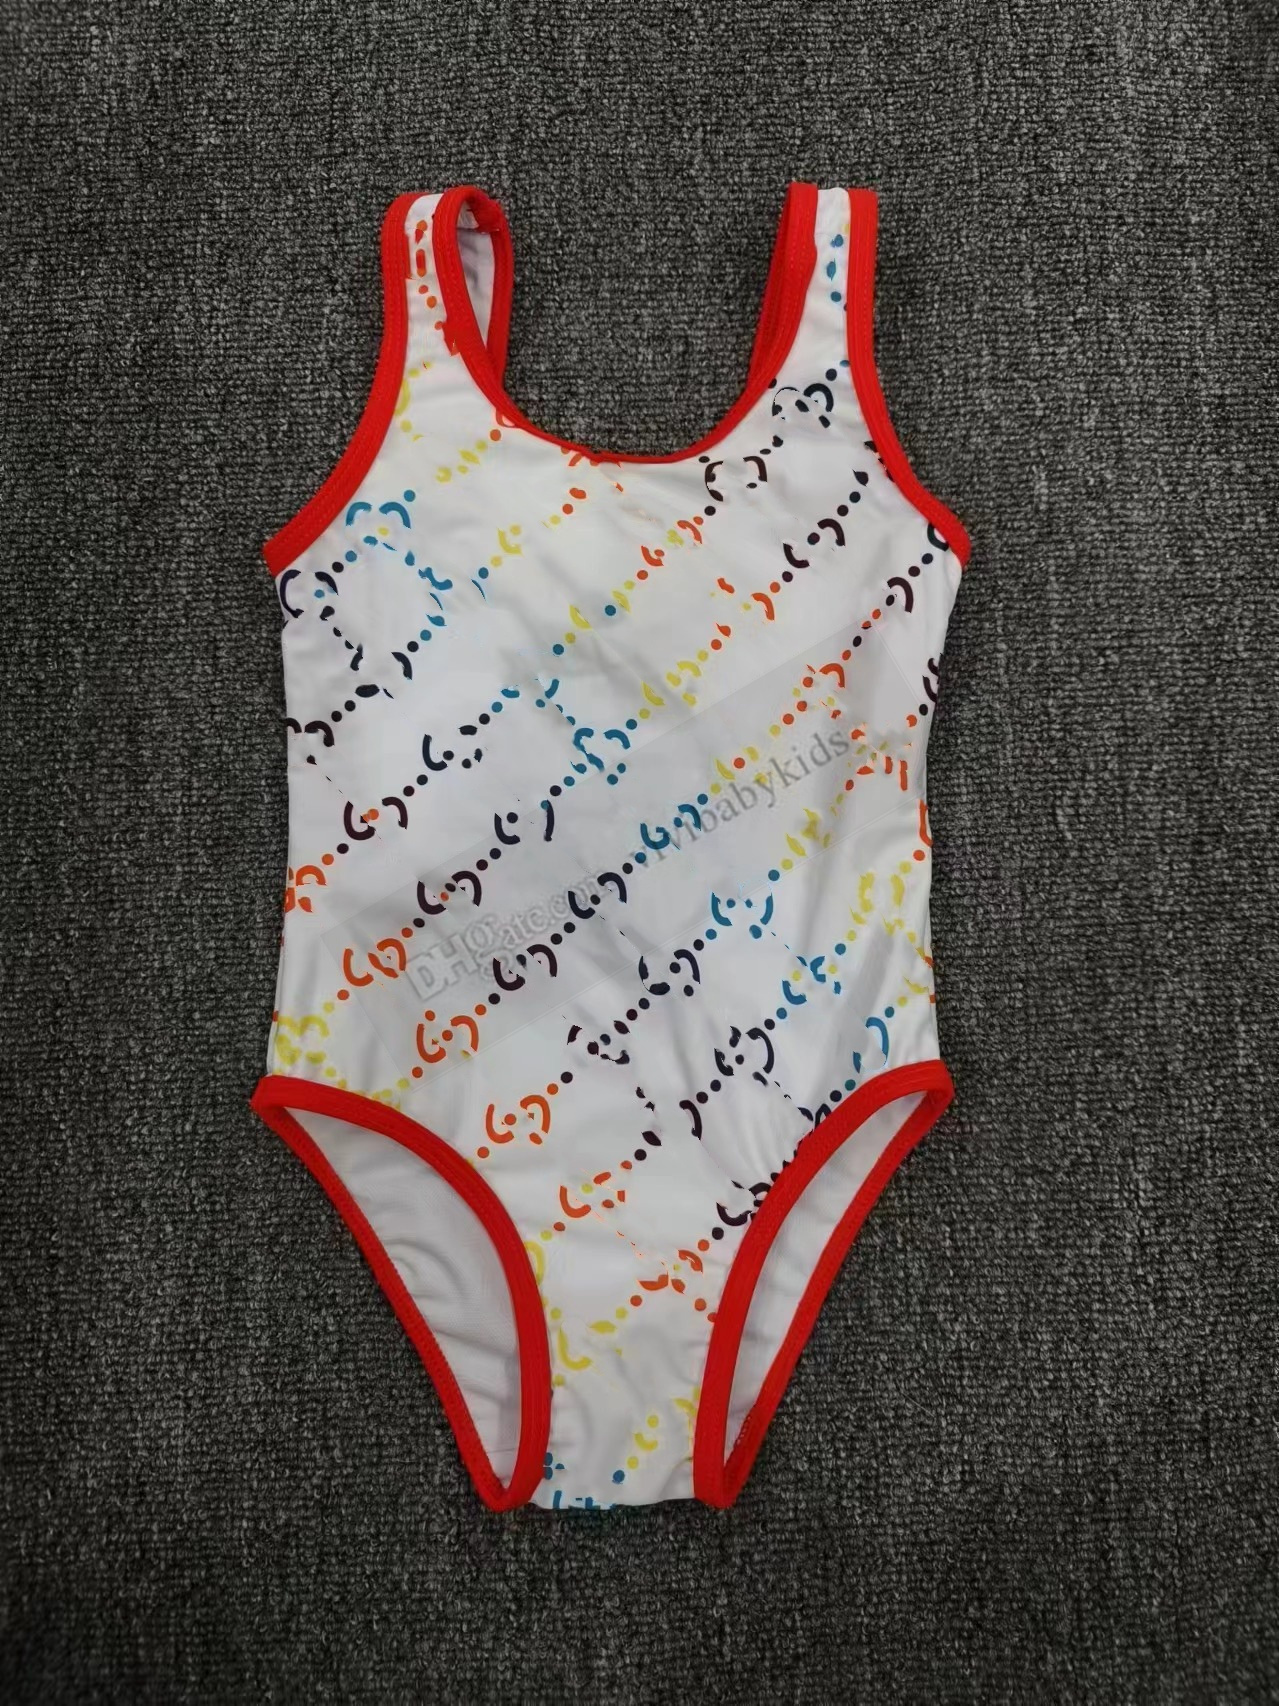 Desinger Girls Dinosaur Printed One-Pieces Swimsuit Ins Kids Star Letter水泳ベビーバススーツビキニ子供漫画ベアビーチ水着S1352